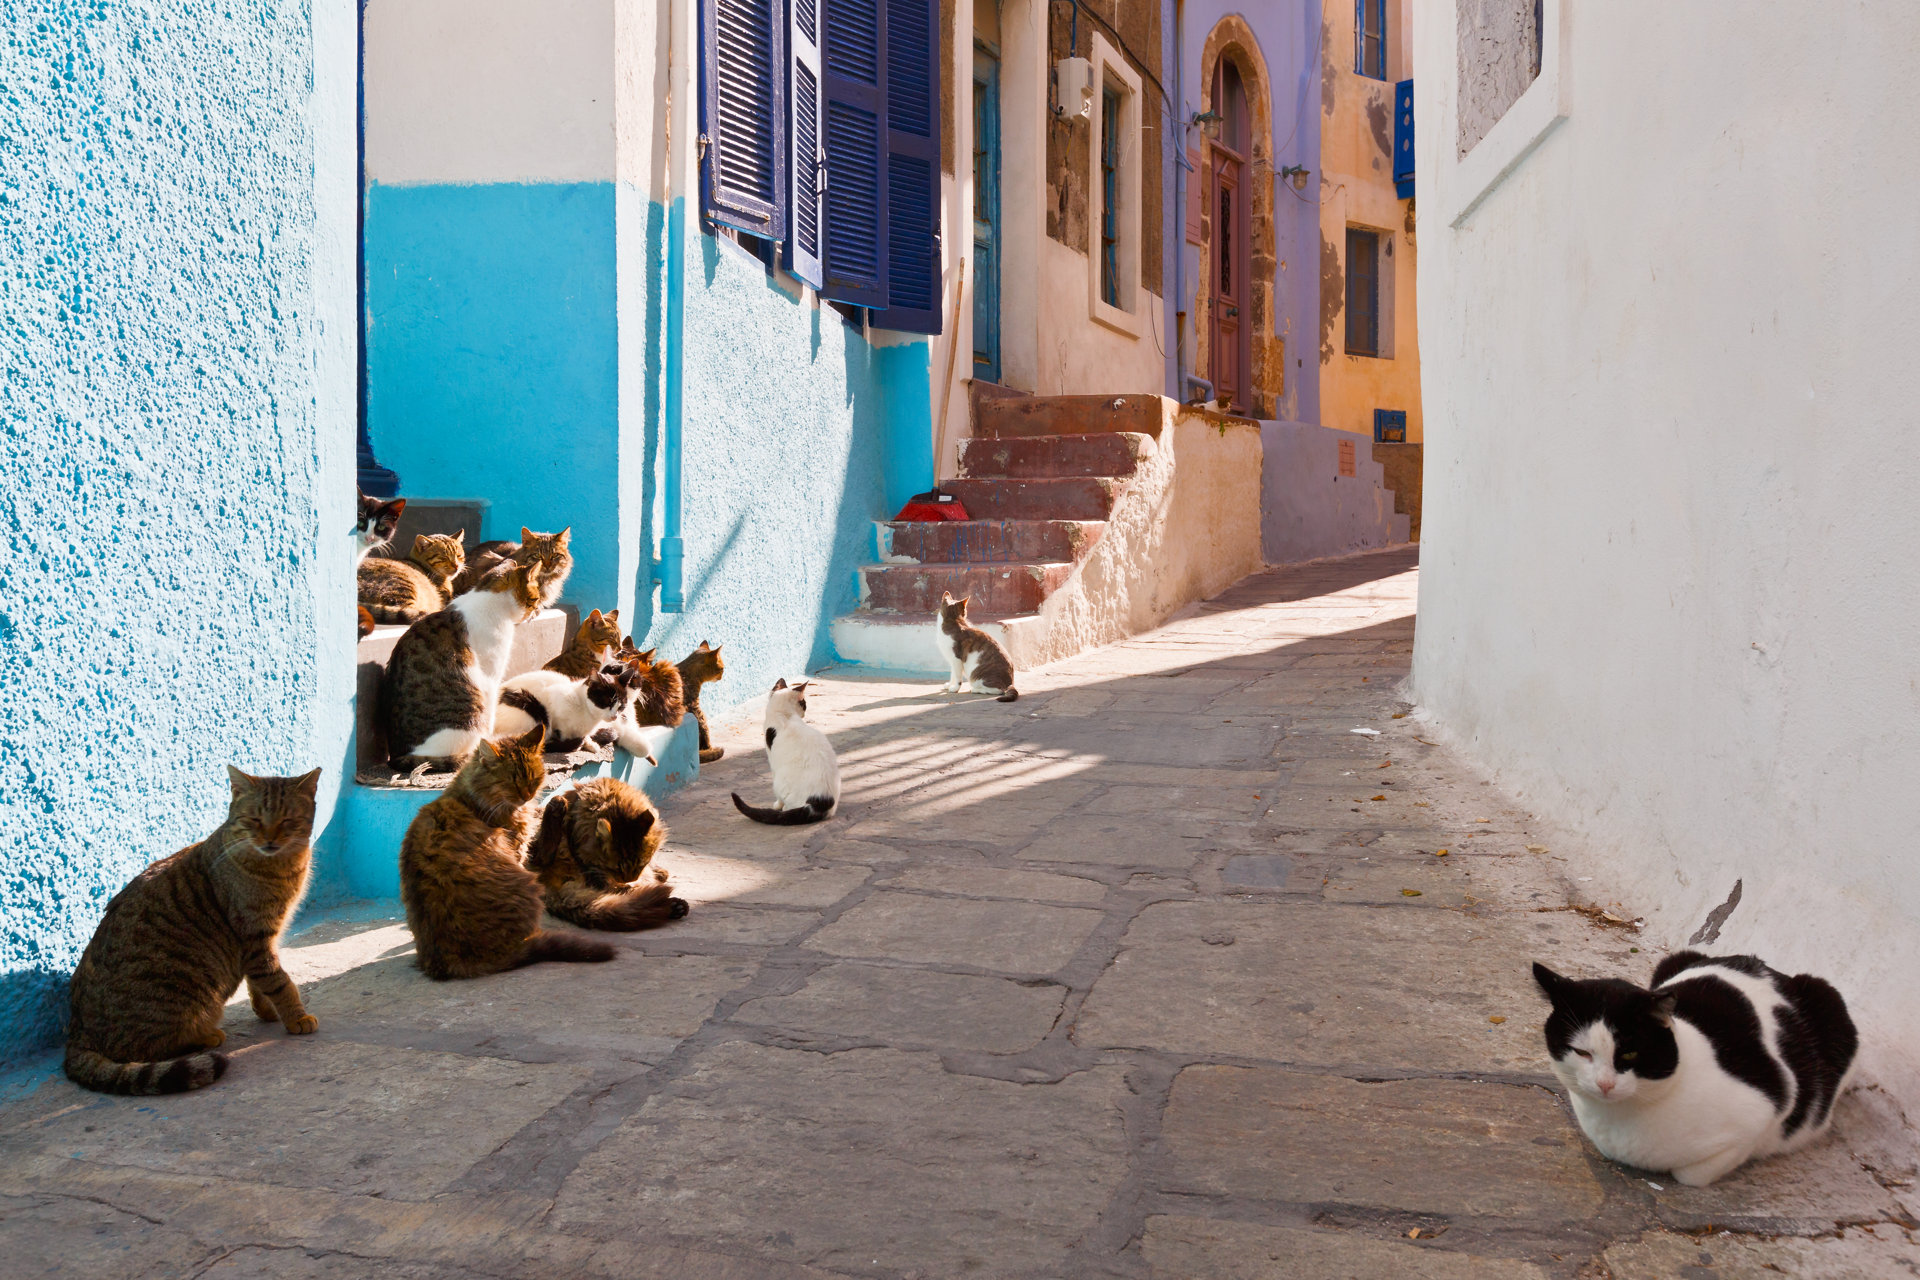 Cats in a street of Mandraki village on Nisyros island